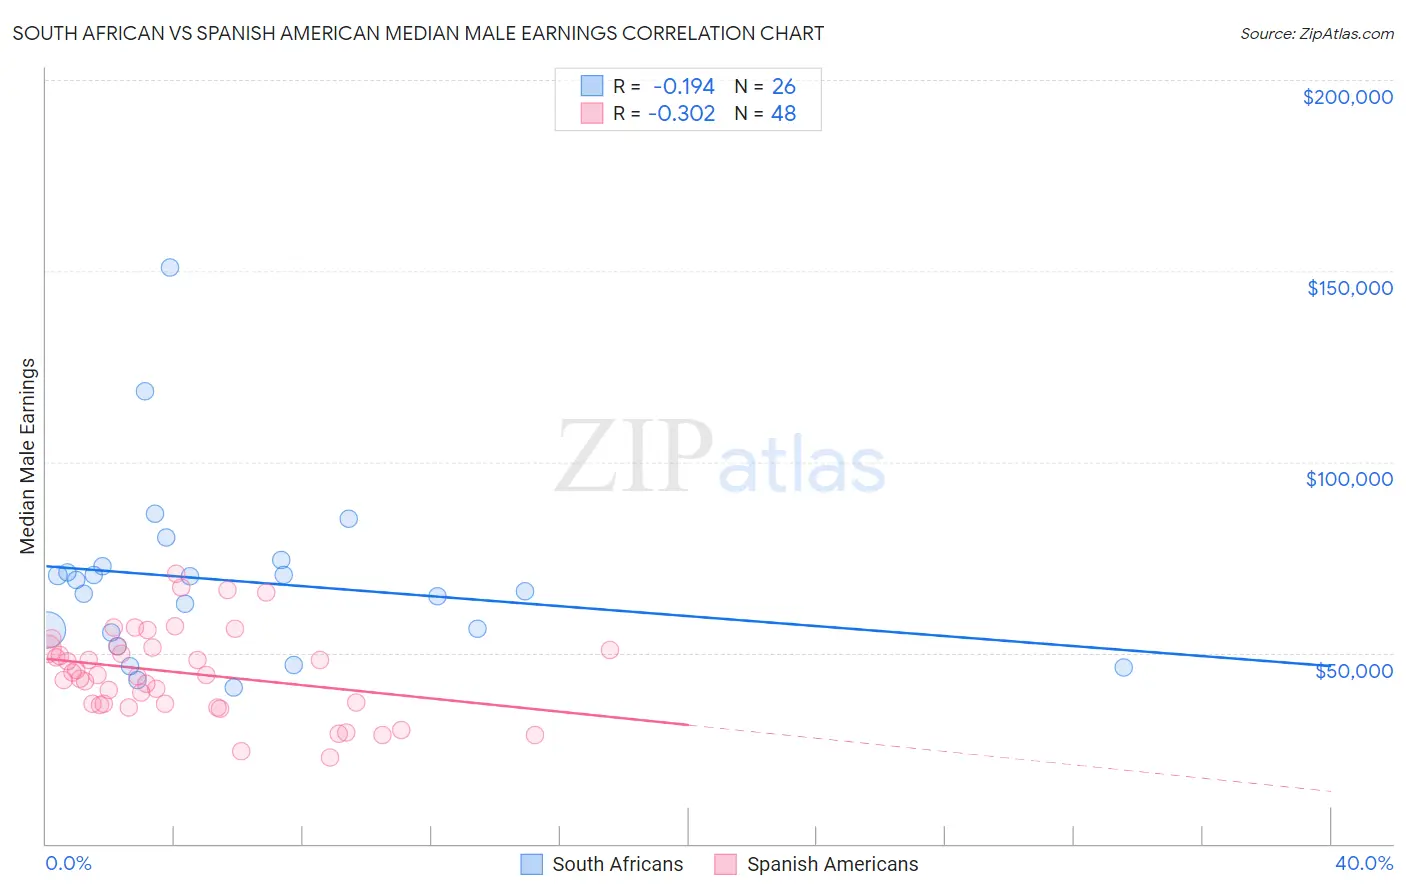 South African vs Spanish American Median Male Earnings